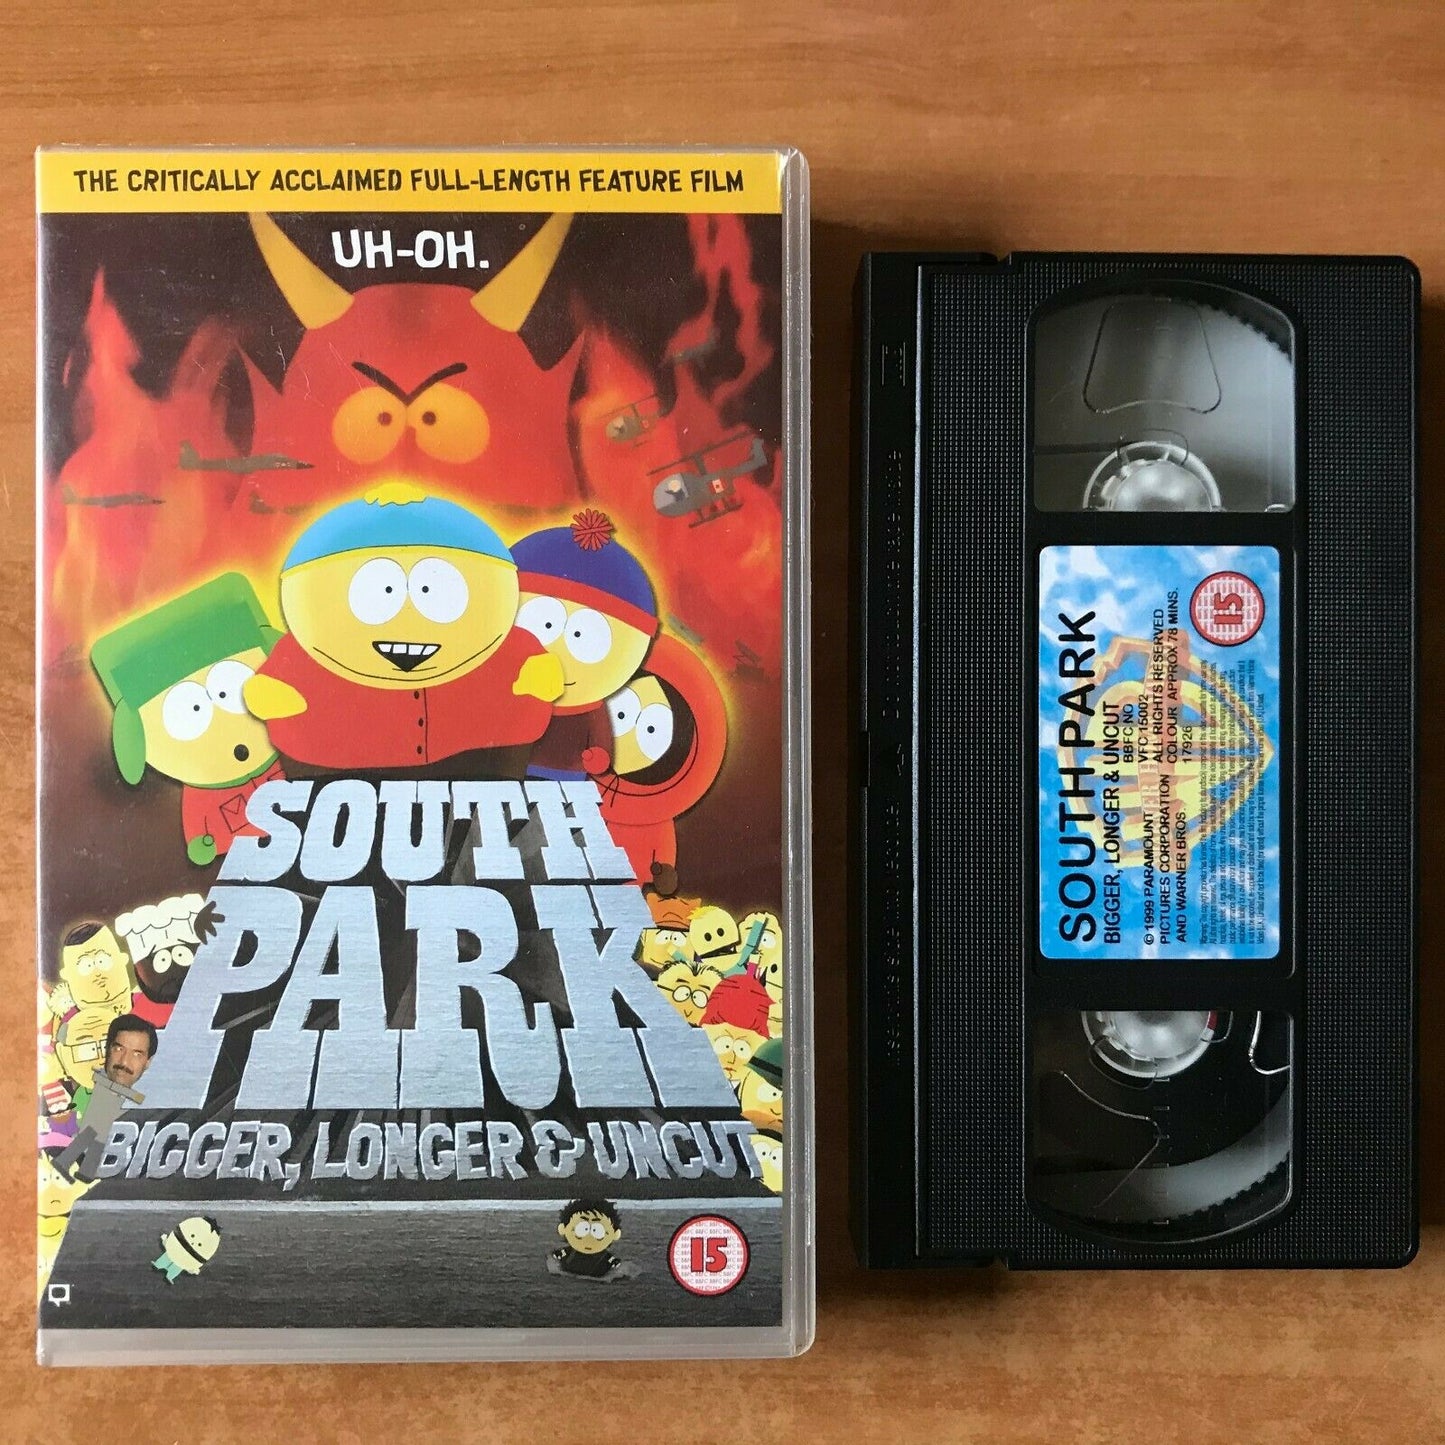 South Park: Bigger, Longer & Uncut; [Large Box] Rental - Animated Comedy - VHS-